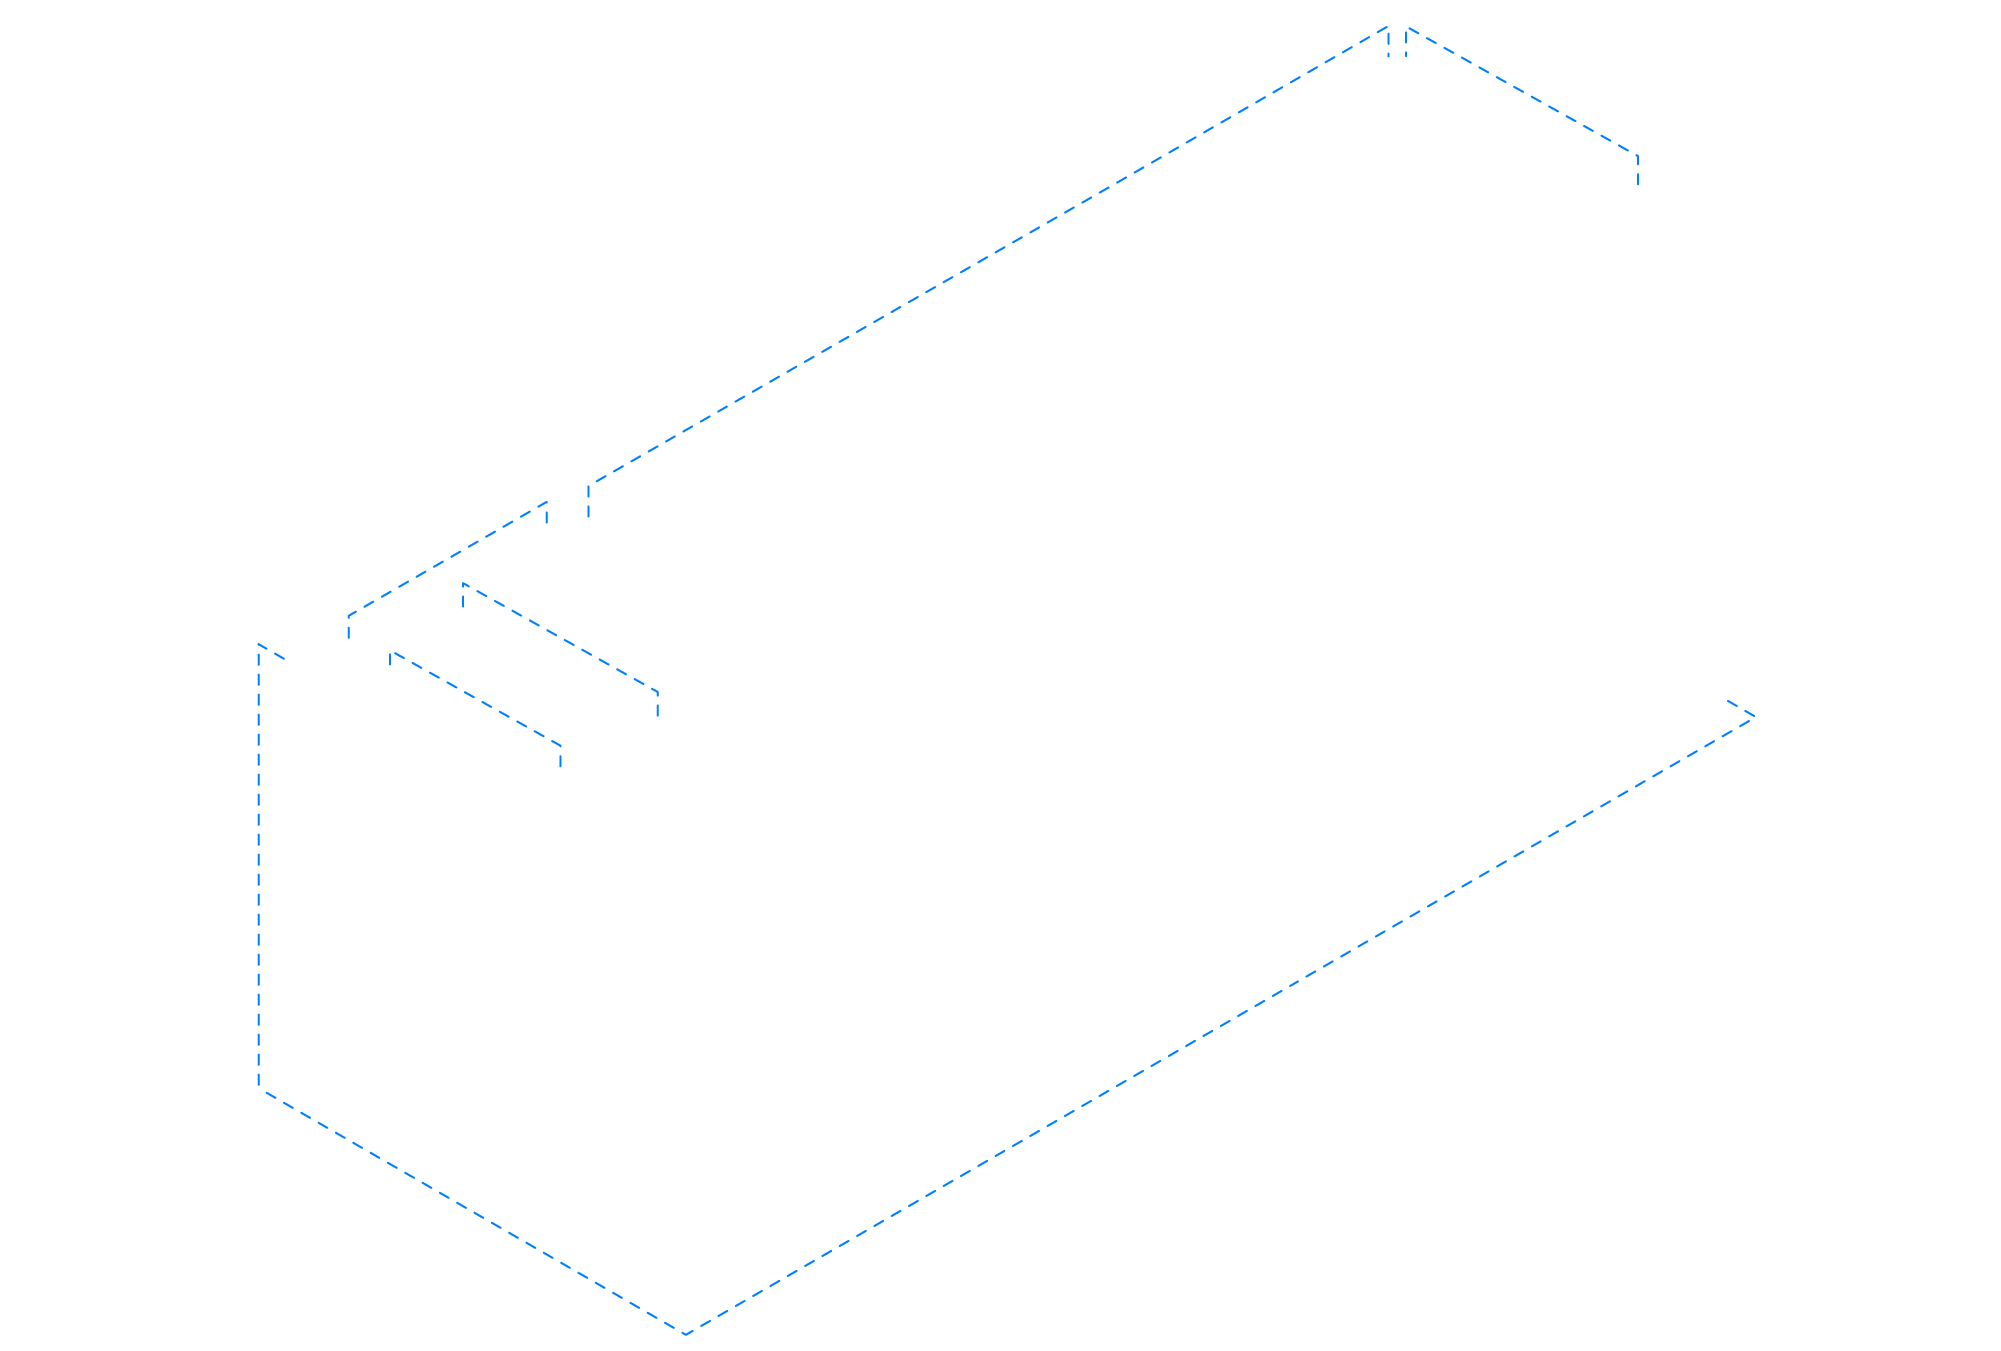 AB-5200 2.0 Dimensions